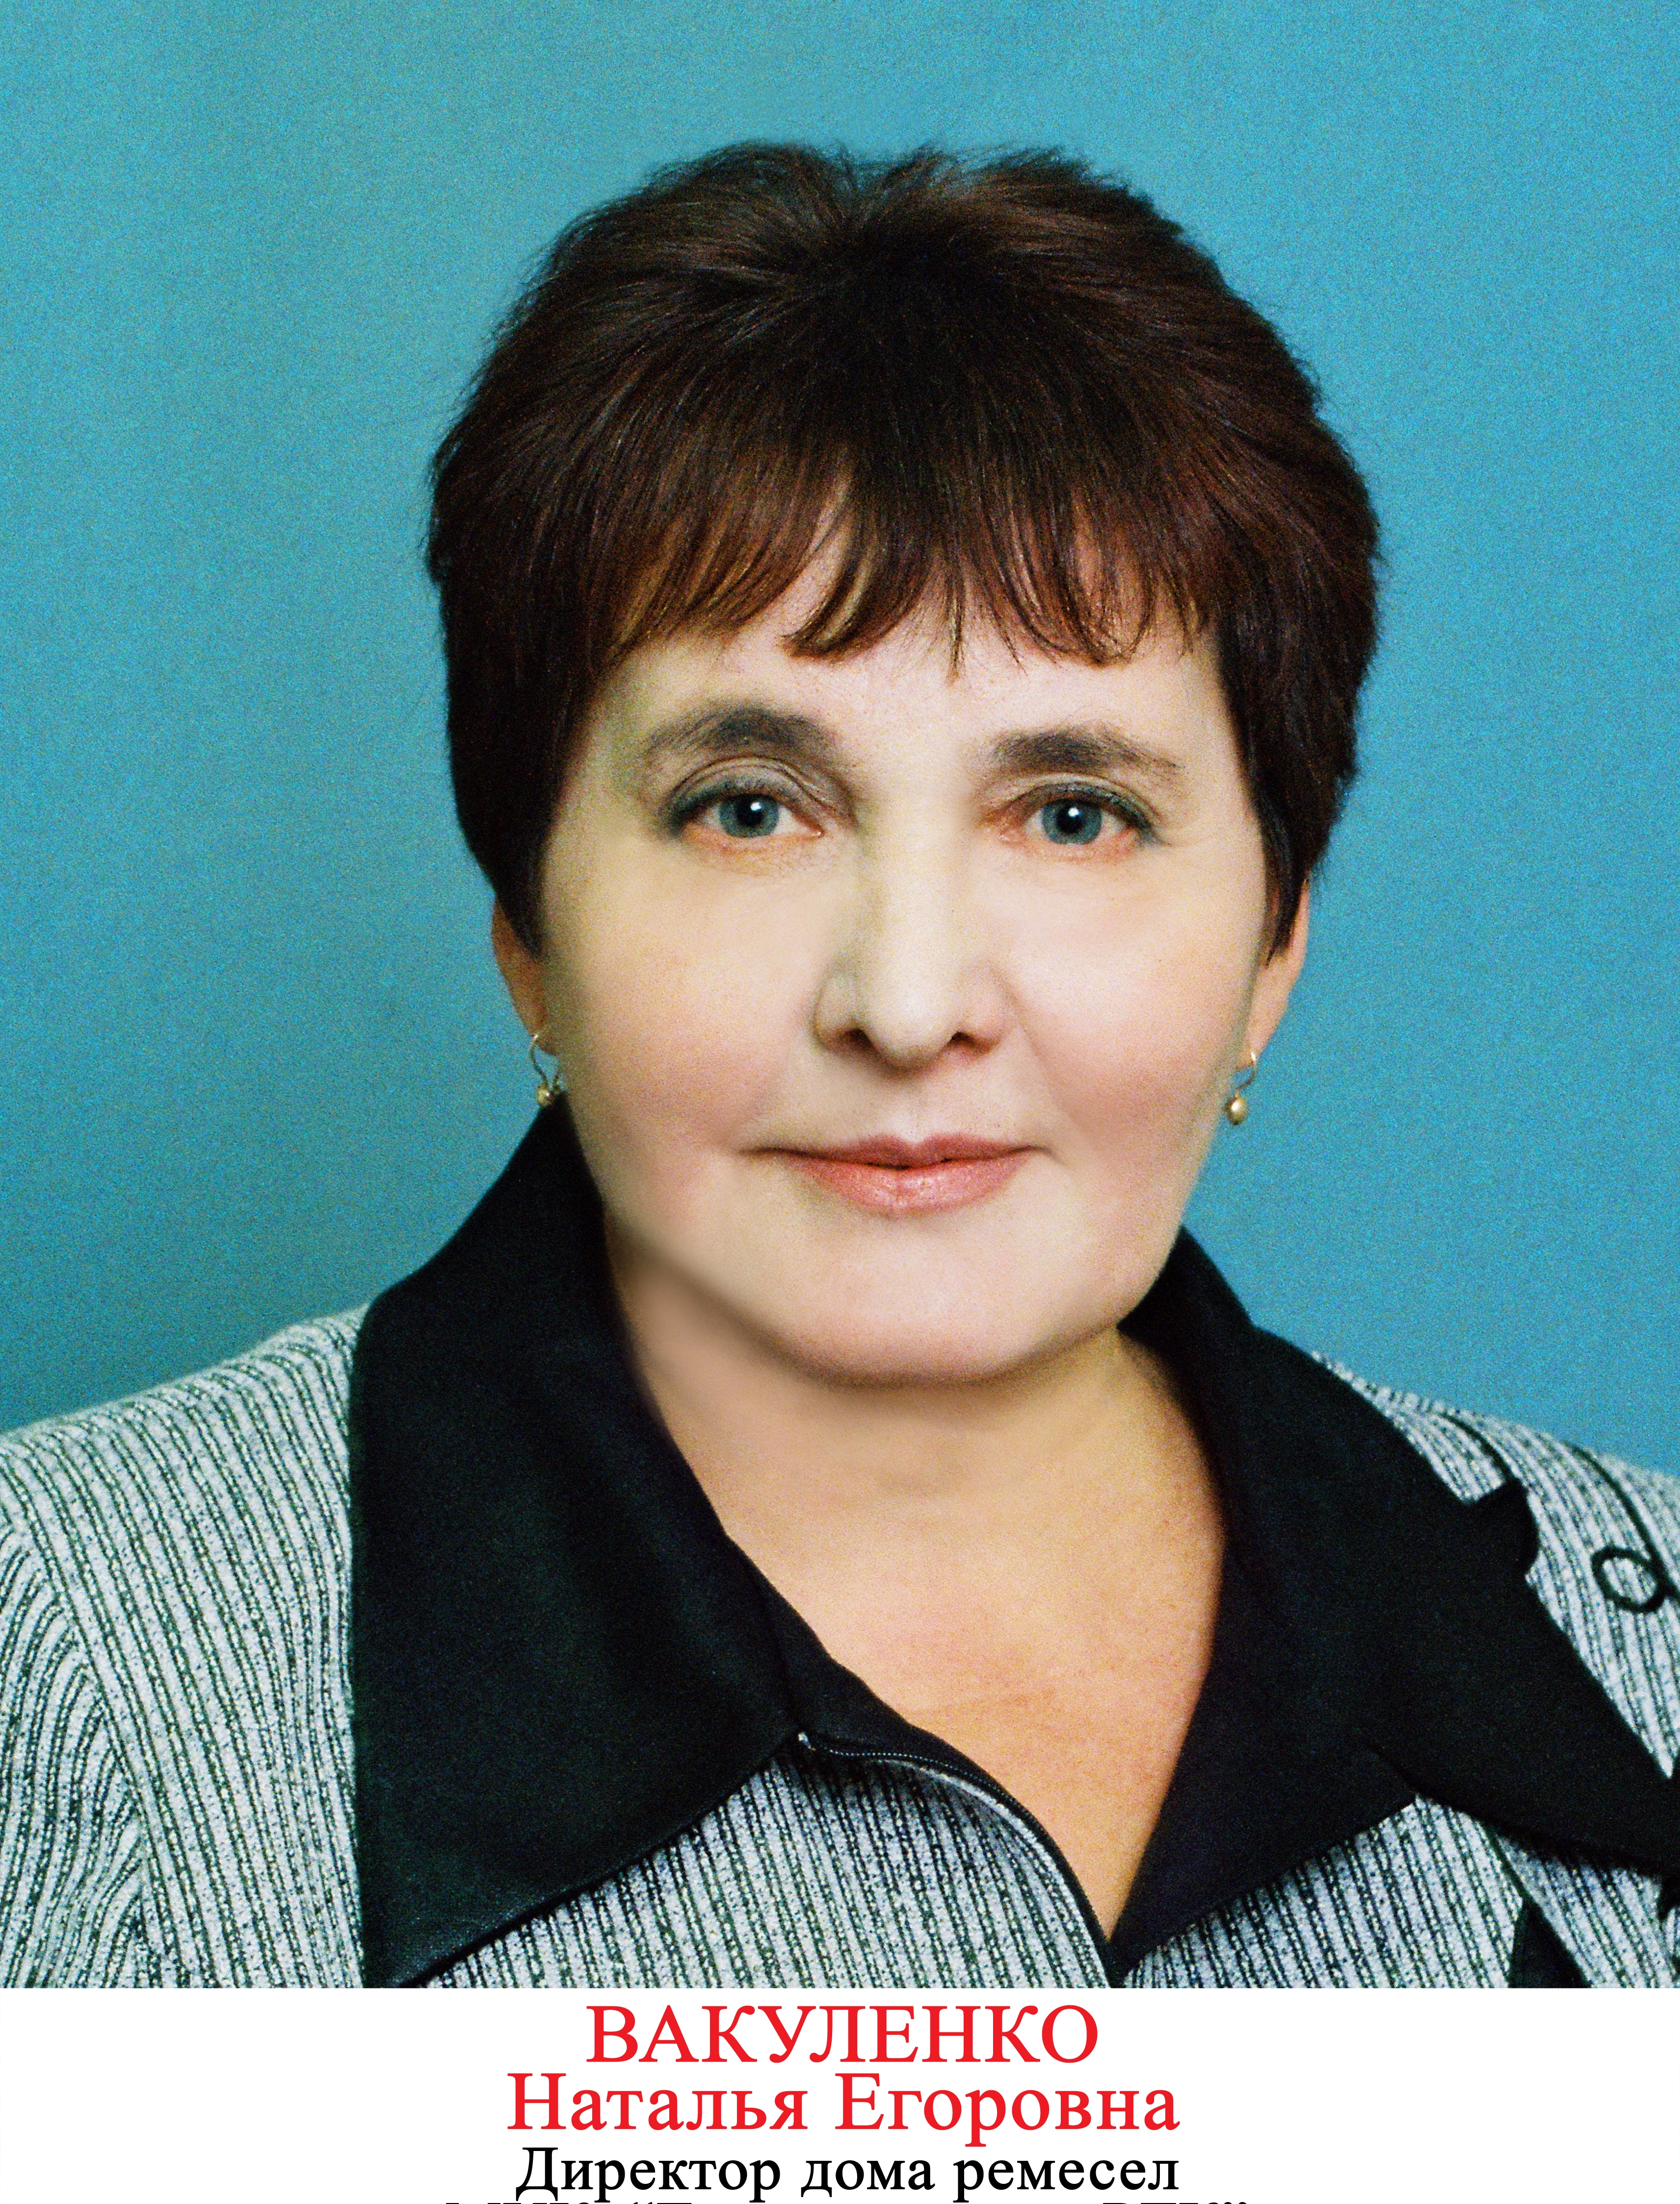 Вакуленко Наталья Егоровна